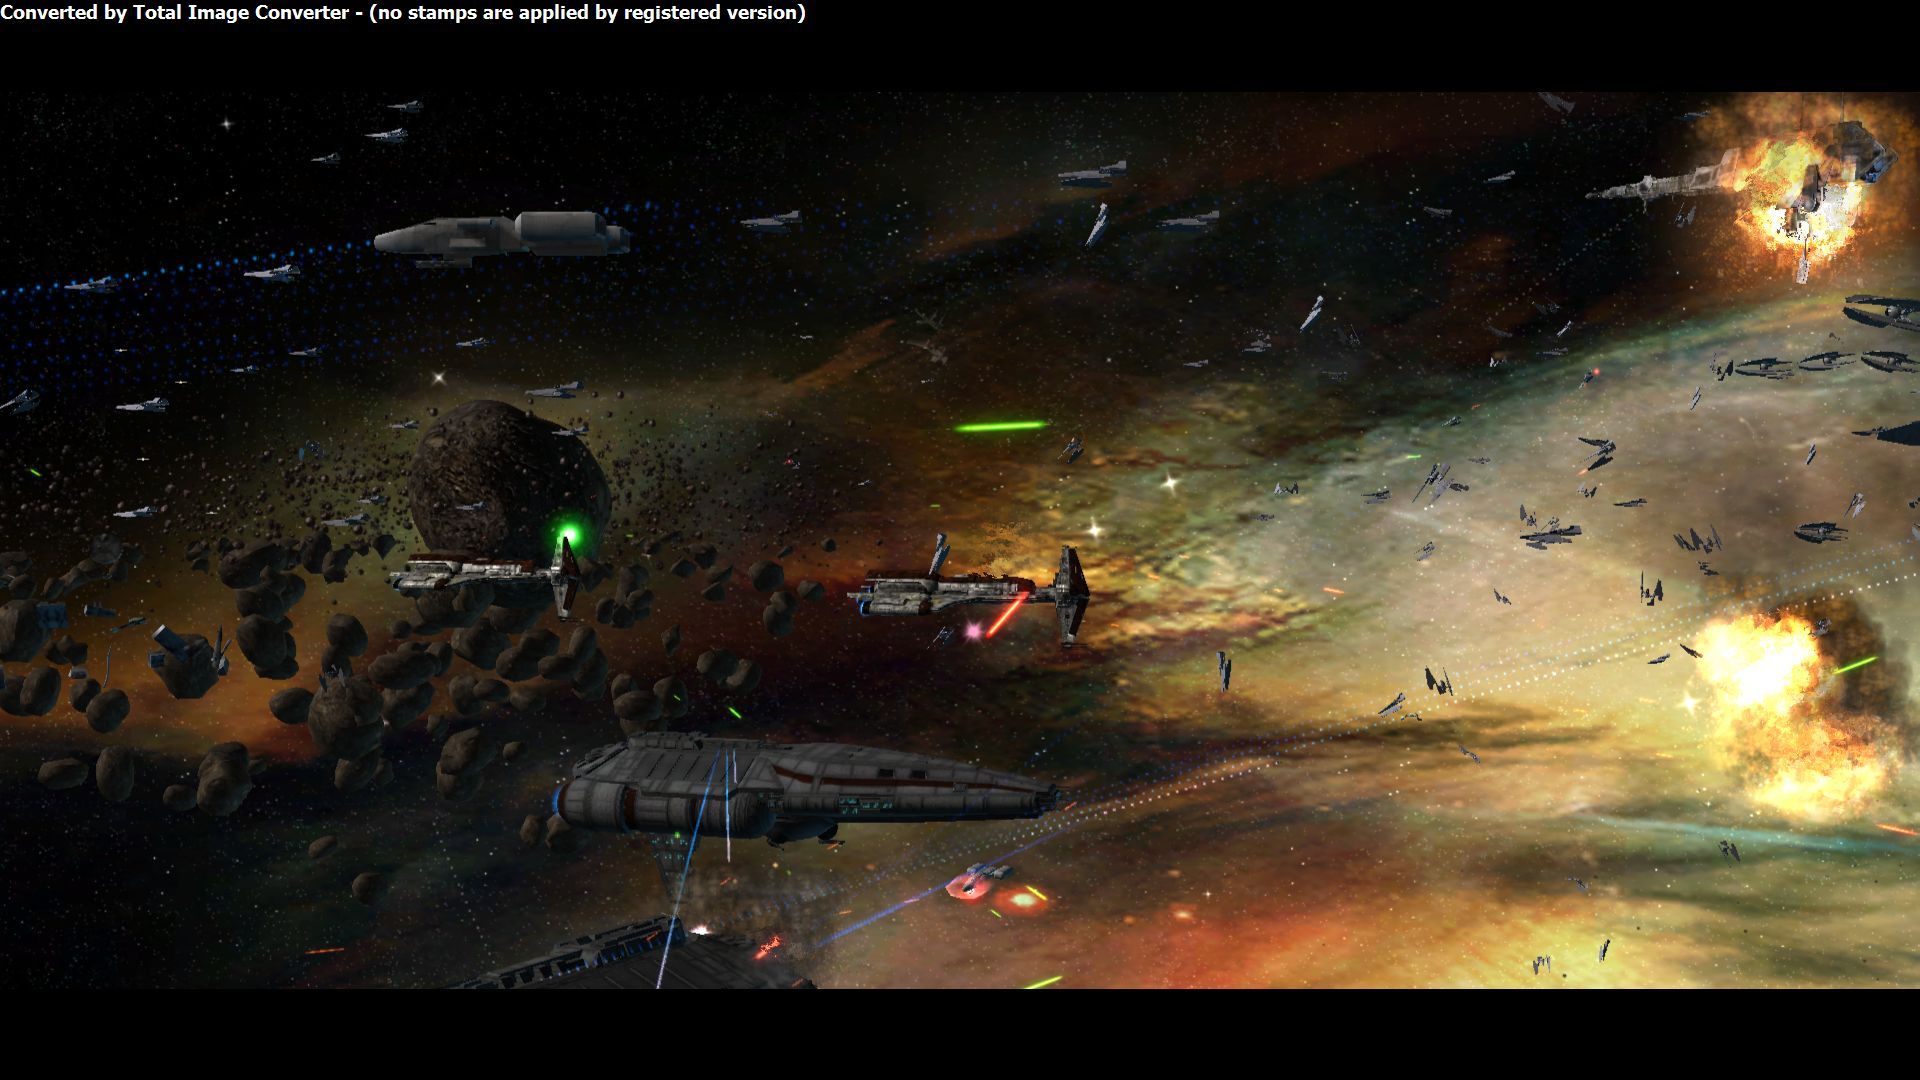 Unusual Star Wars Space Battles Wallpaper Wars Wallpaper